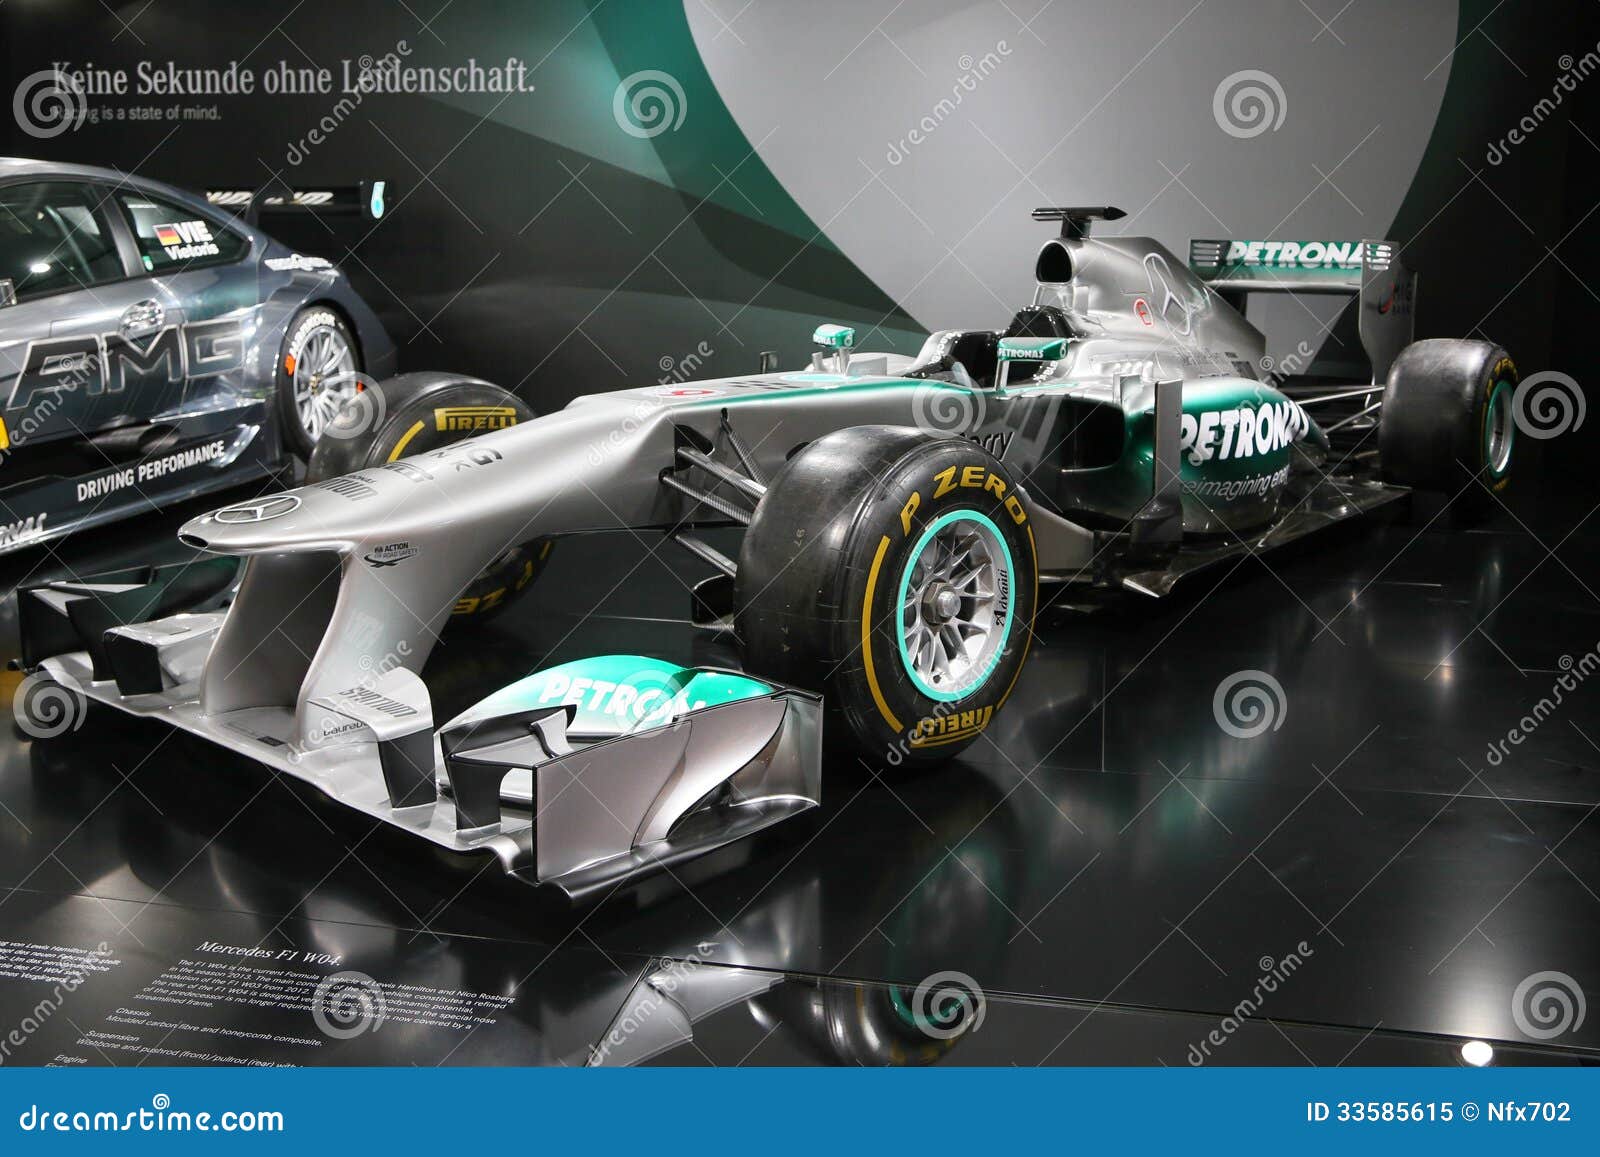 my satire news Formula 1 Car Mercedes F1 W04 Editorial Image - Image of mercedes,  ausstellung: 33585615